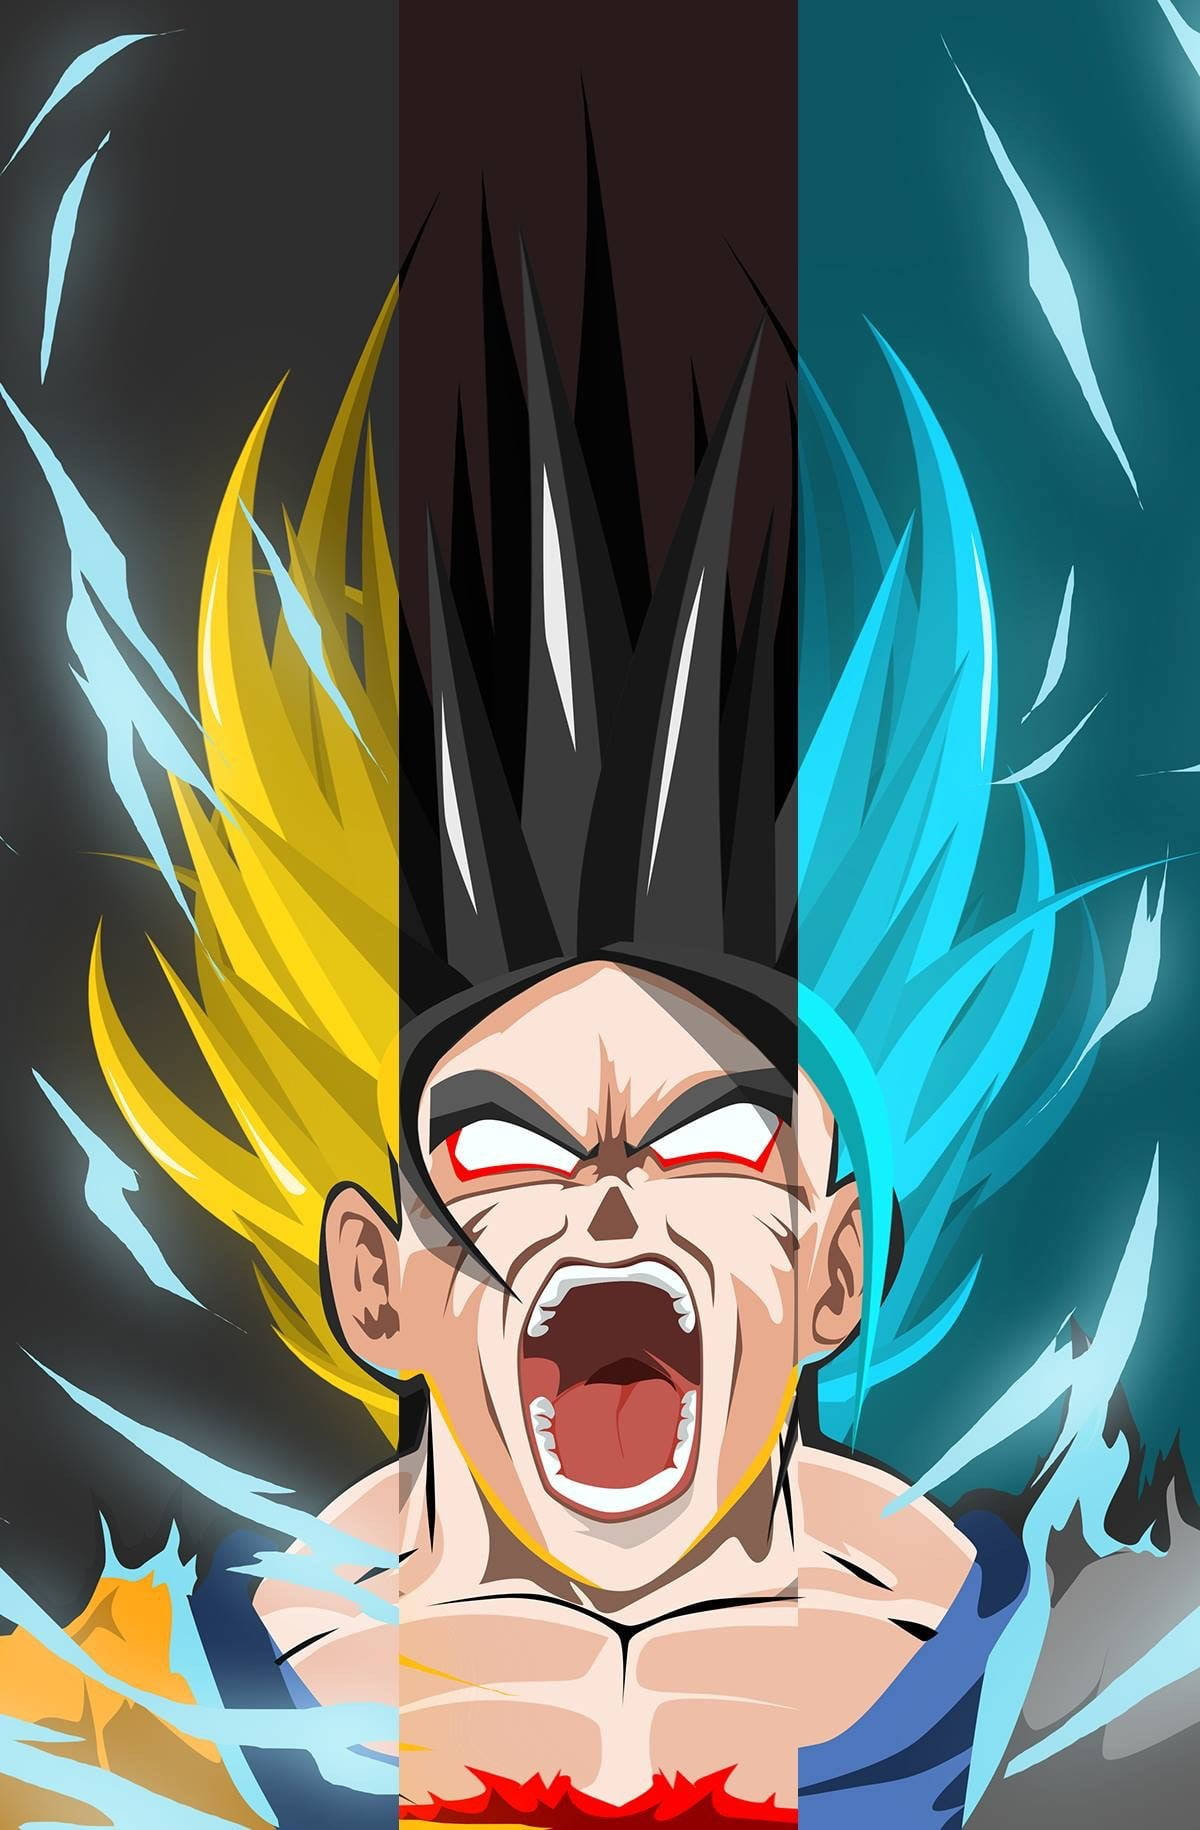 Top 999+ Ssj4 Goku Wallpaper Full HD, 4K✅Free to Use